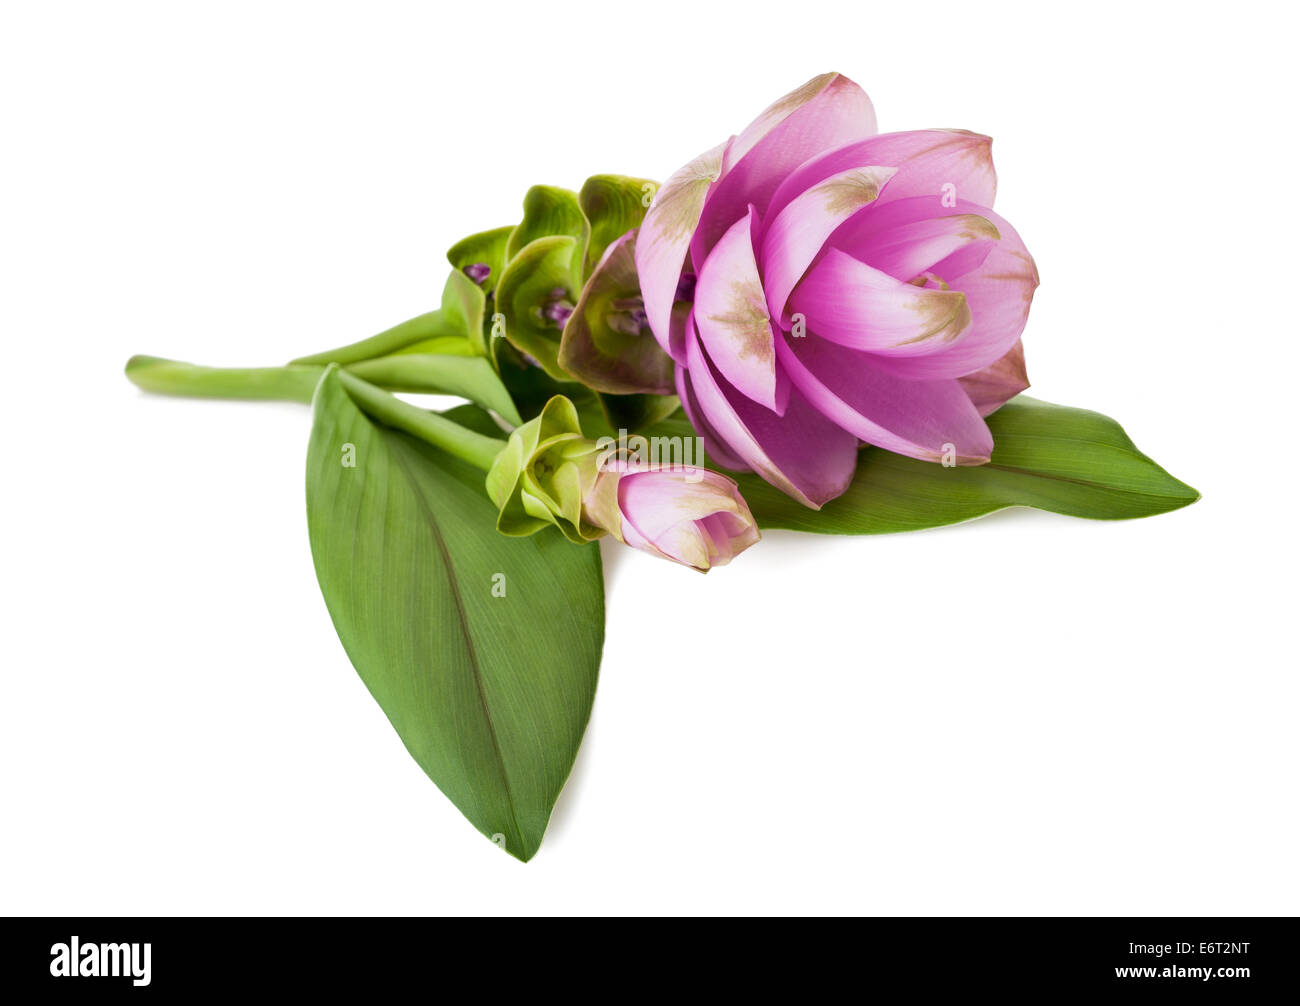 Siam tulip or Curcuma flower isolated on white background Stock Photo